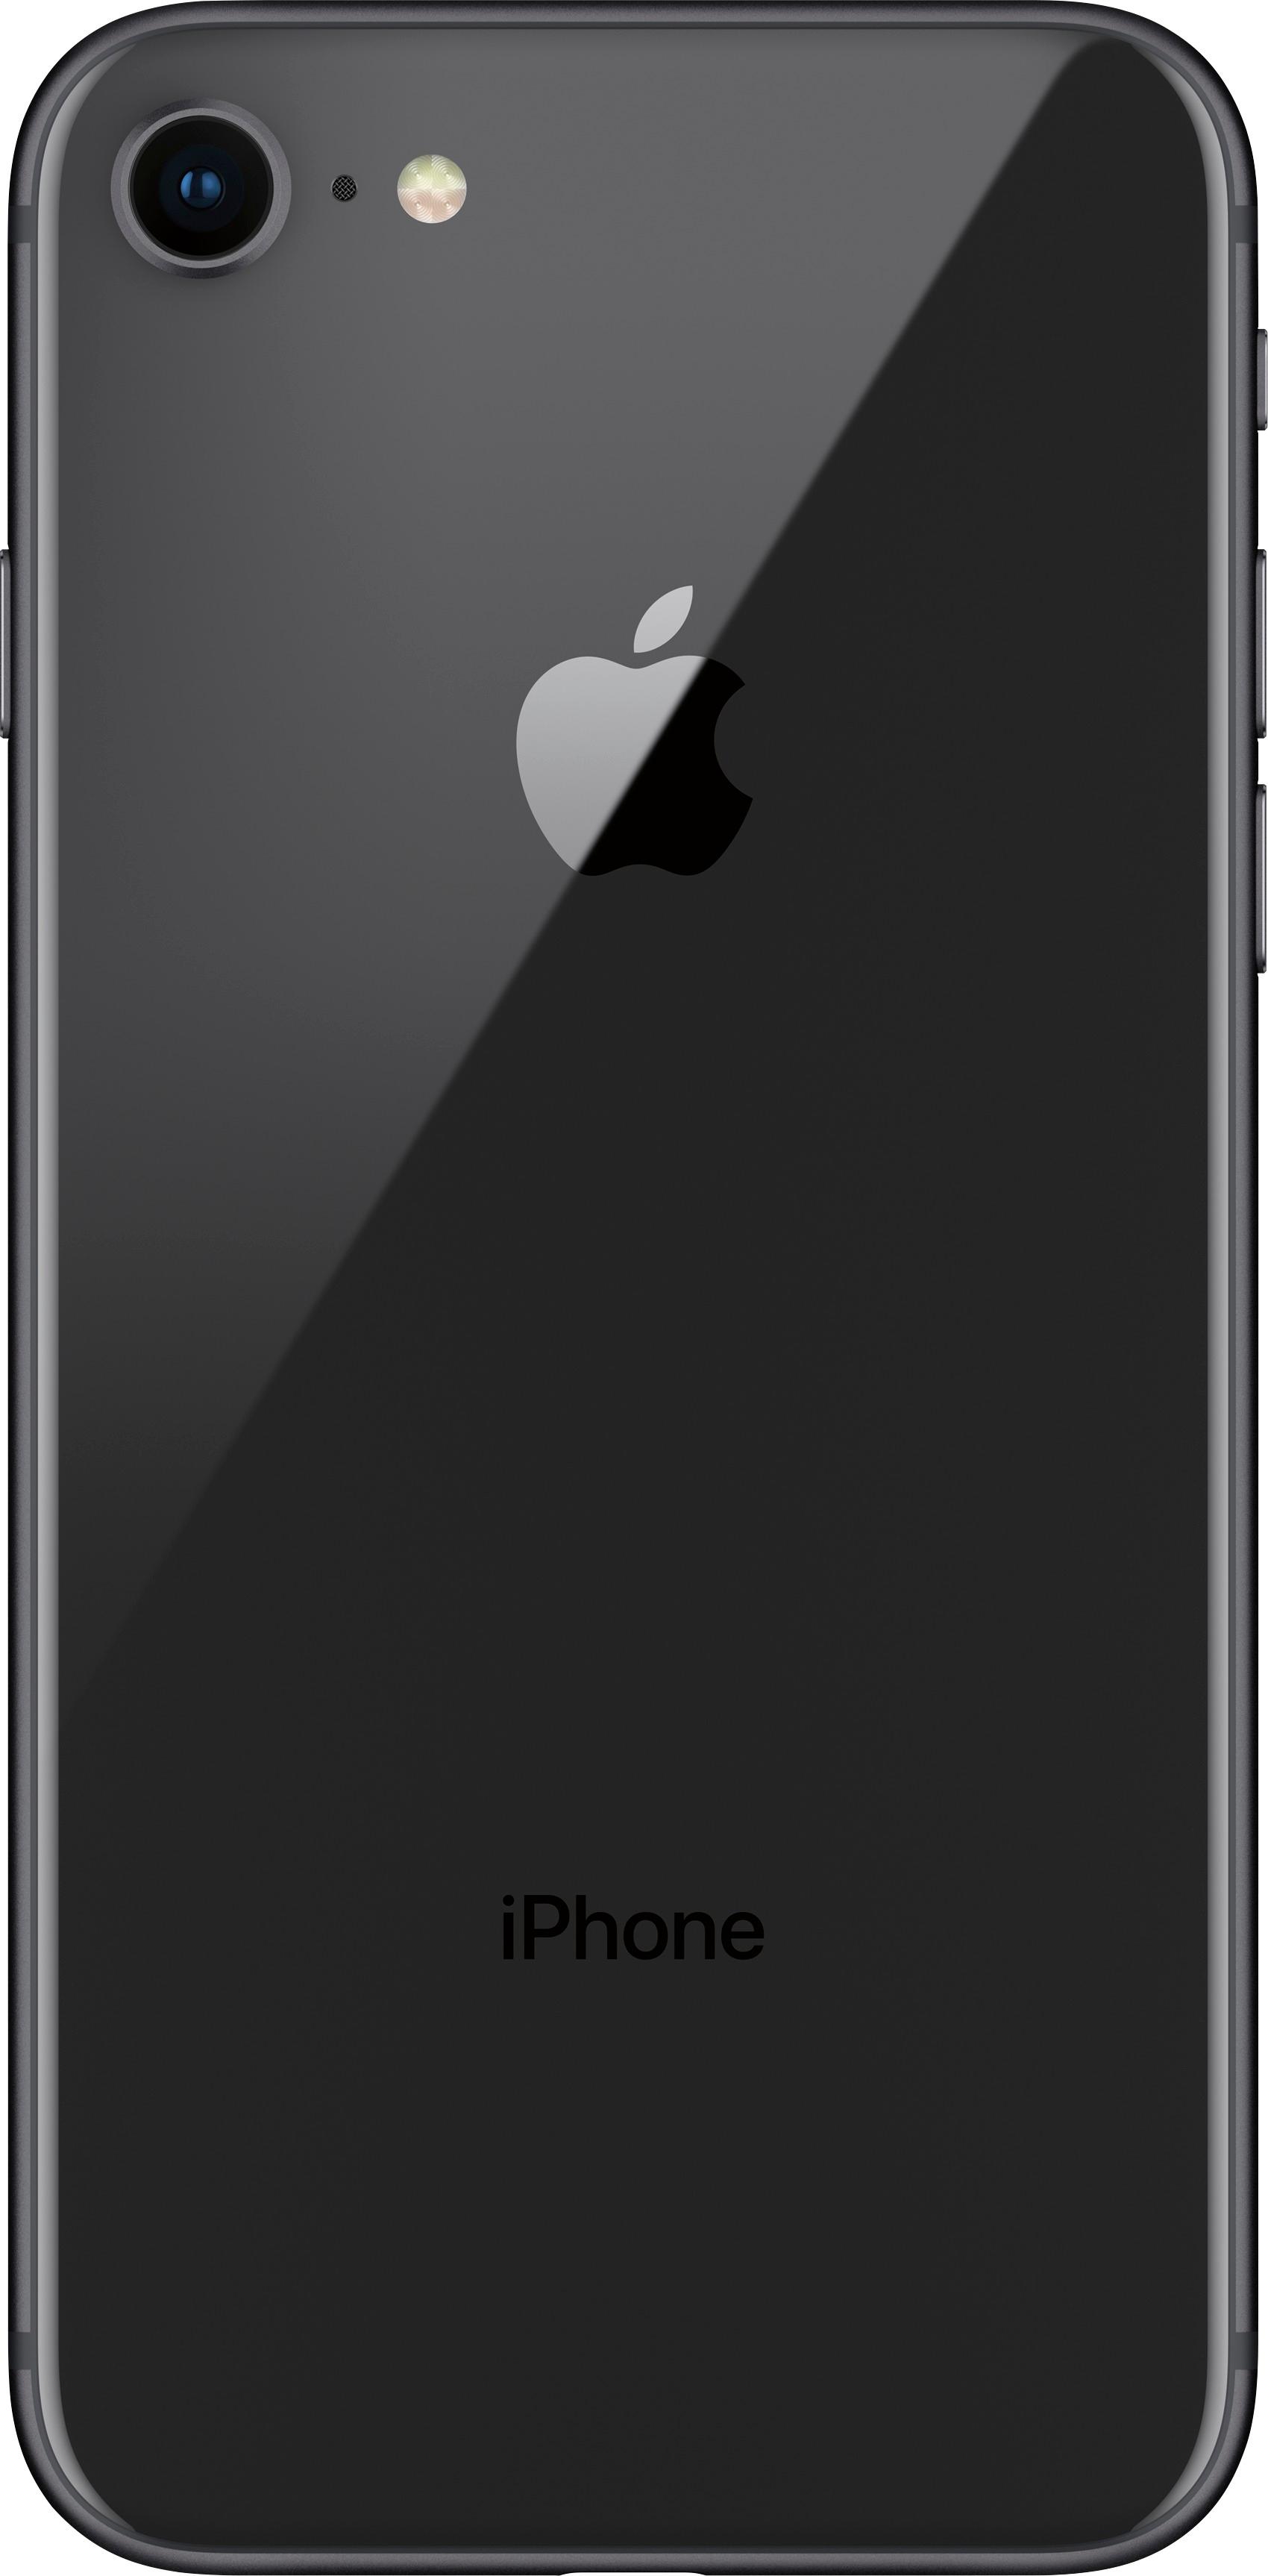 Apple Iphone 8 256gb Space Gray Verizon Mq7f2ll A Best Buy